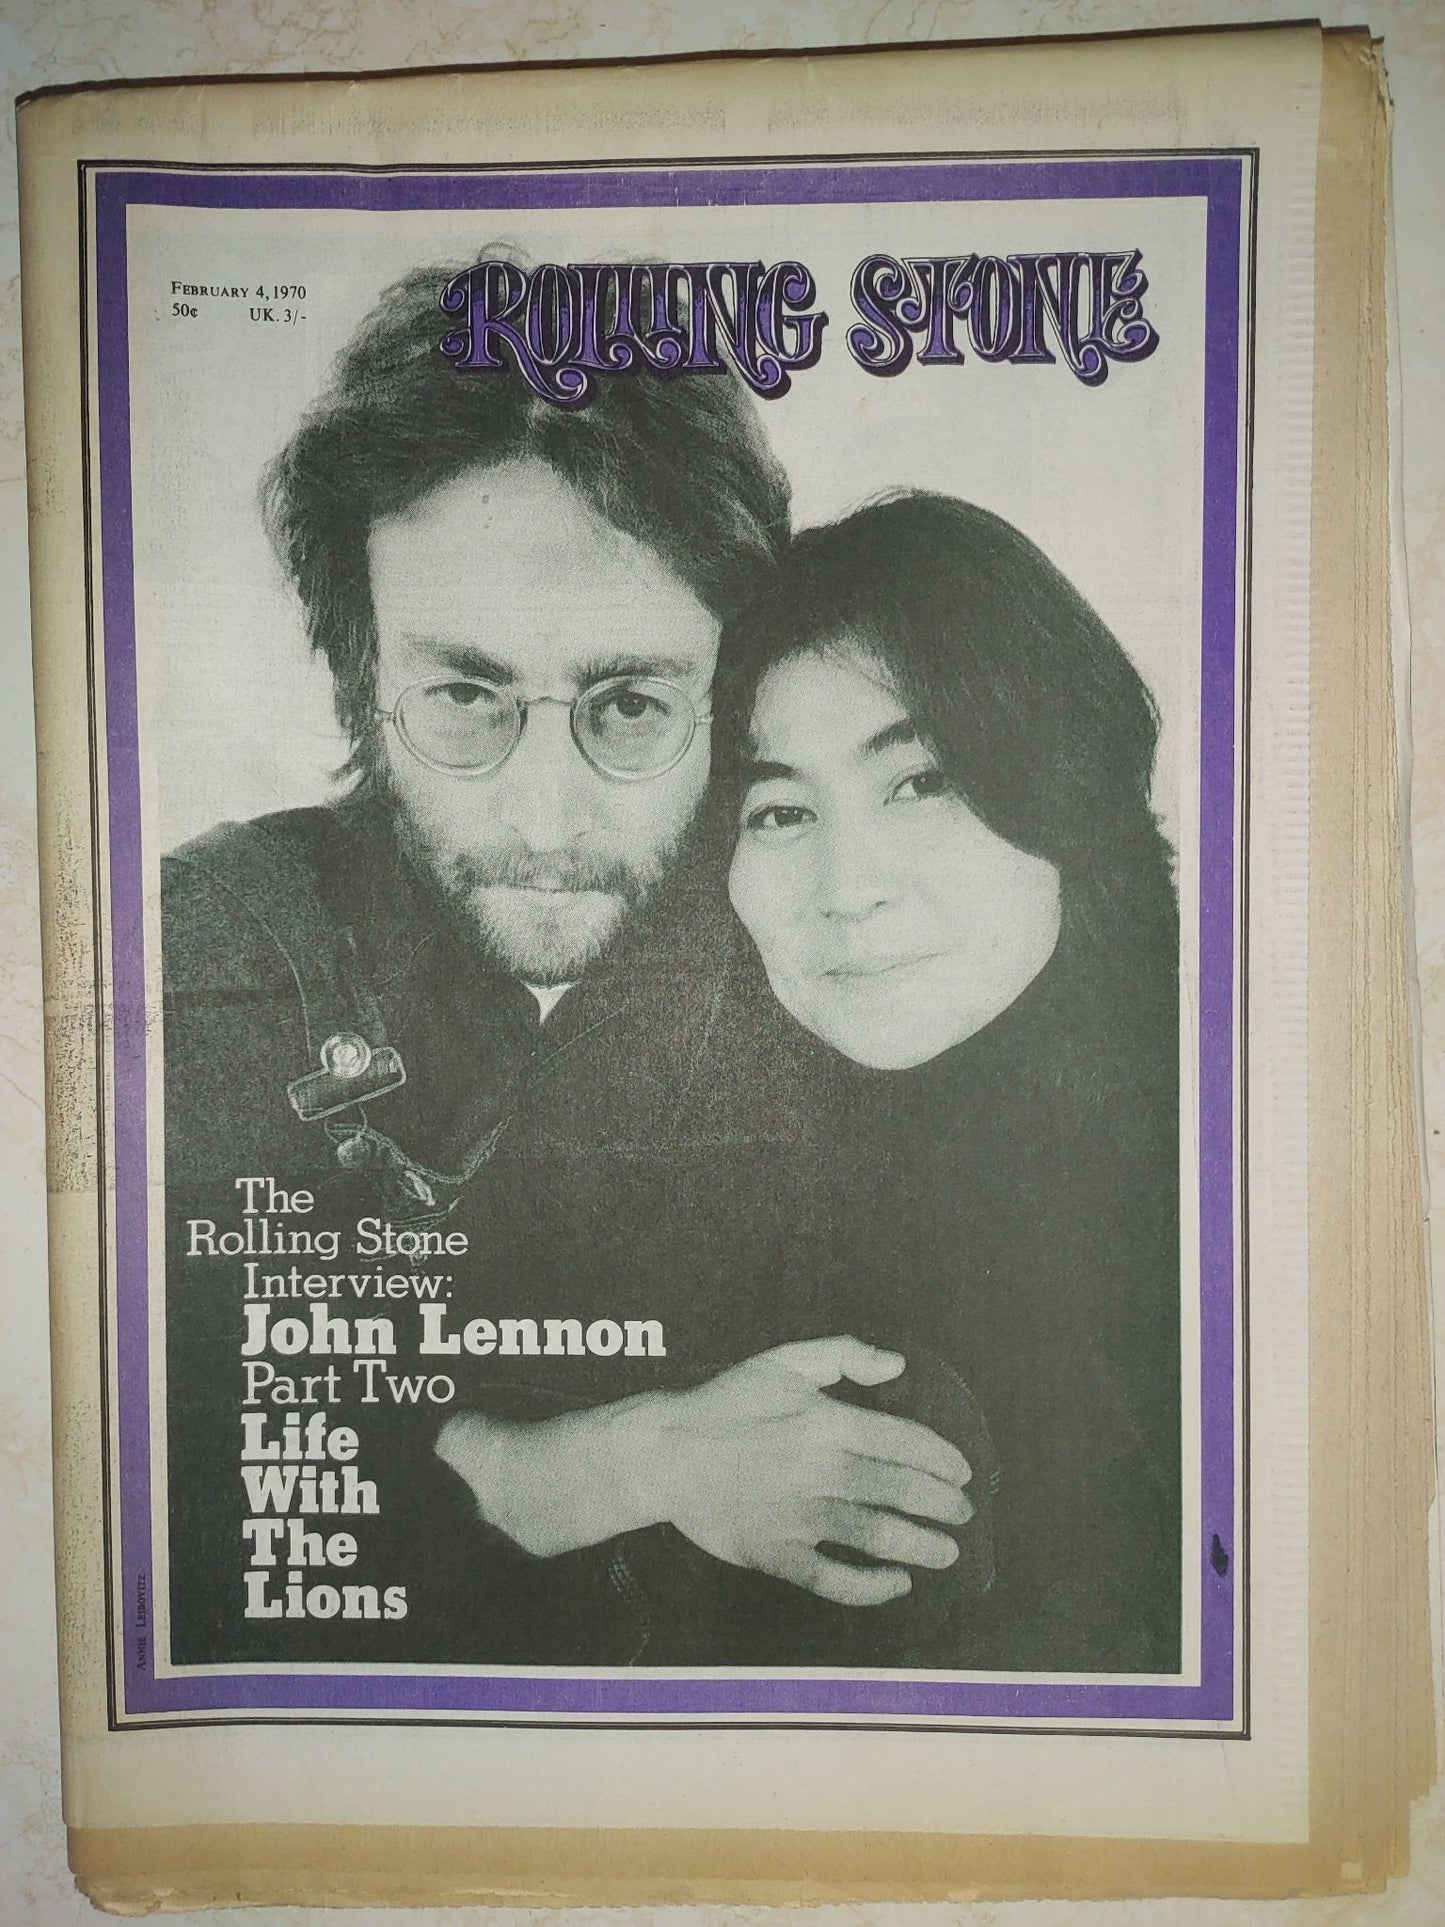 Rolling Stone Magazine Feb. 4, 1970 Issue #75 John Lennon